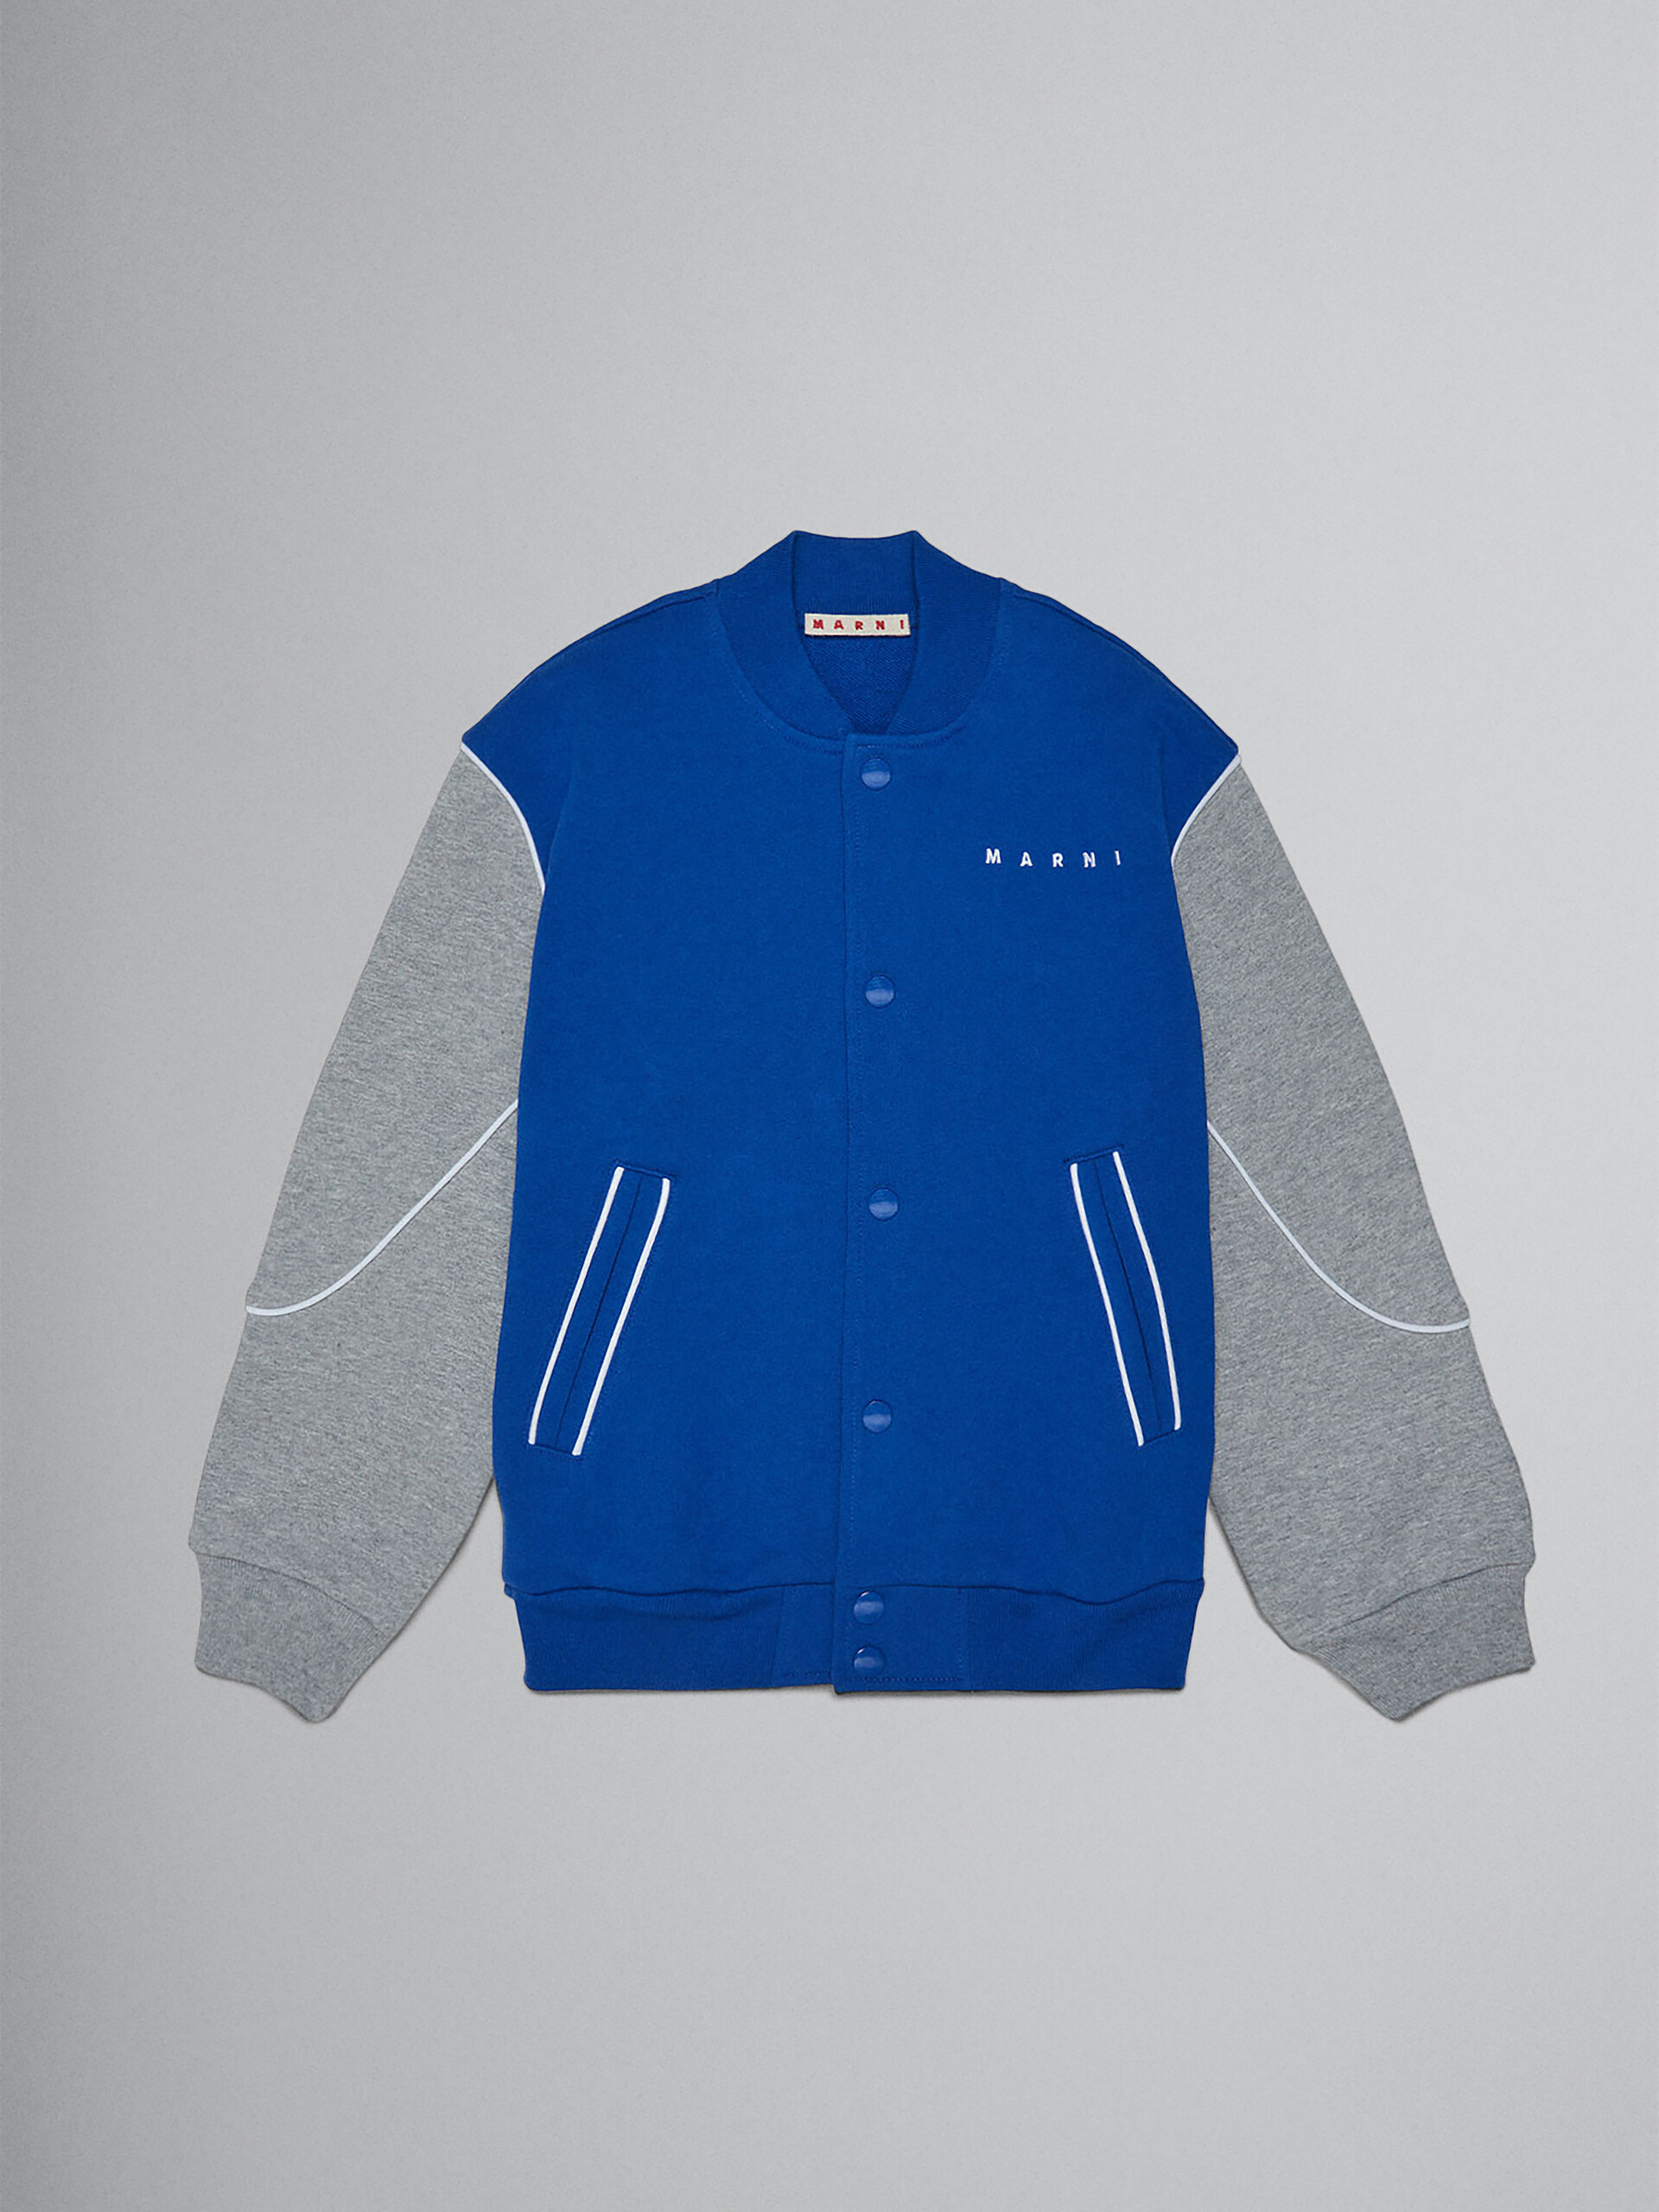 Blue fleece bomber jacket with logo on the back - Sweaters - Image 1